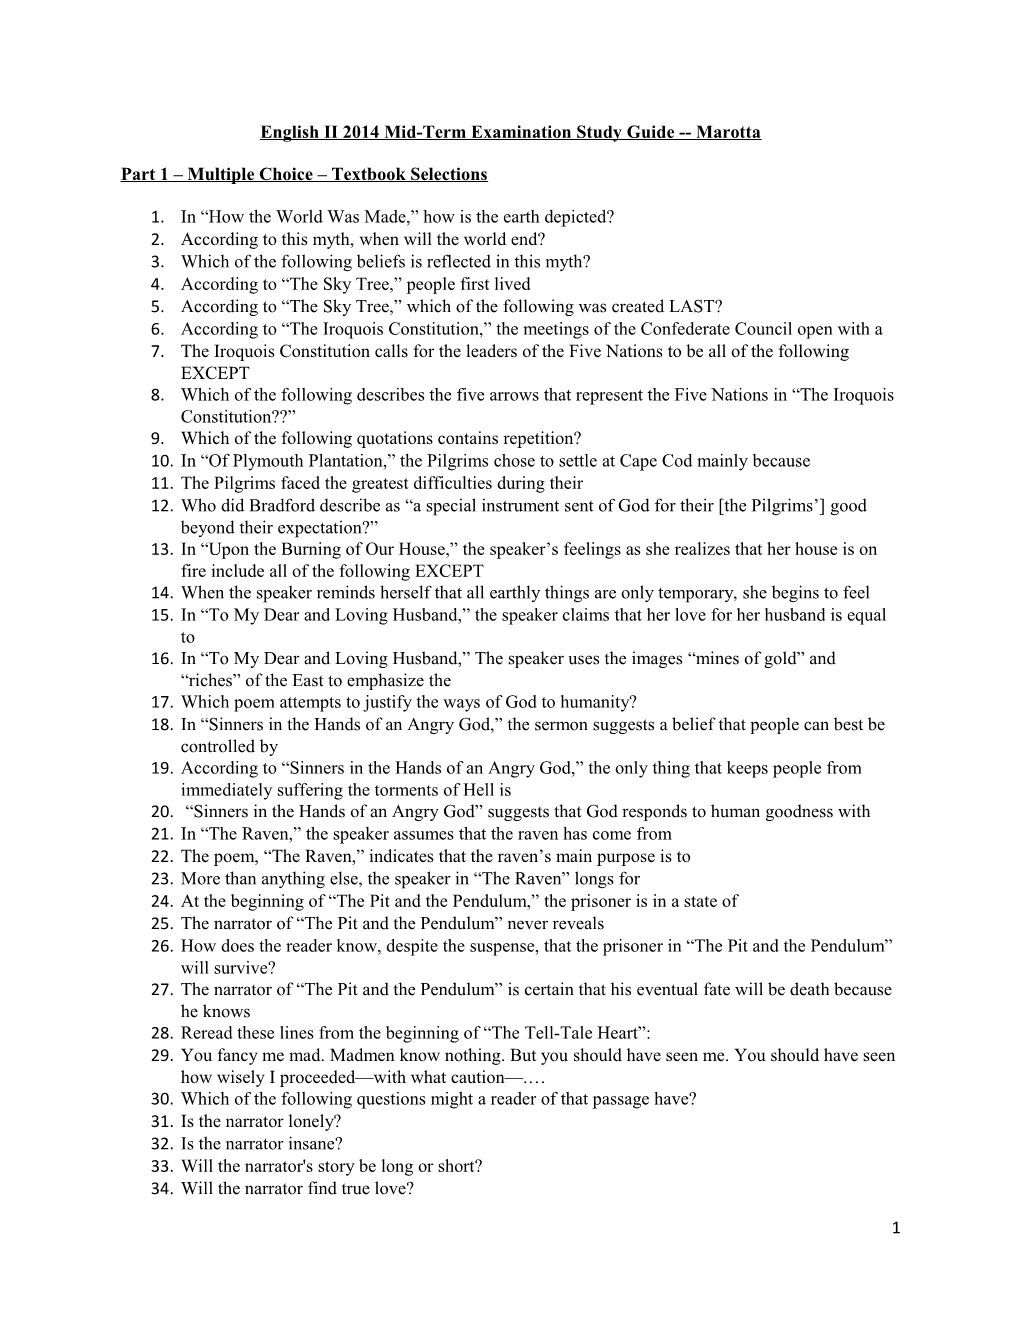 English II2014 Mid-Term Examination Study Guide Marotta